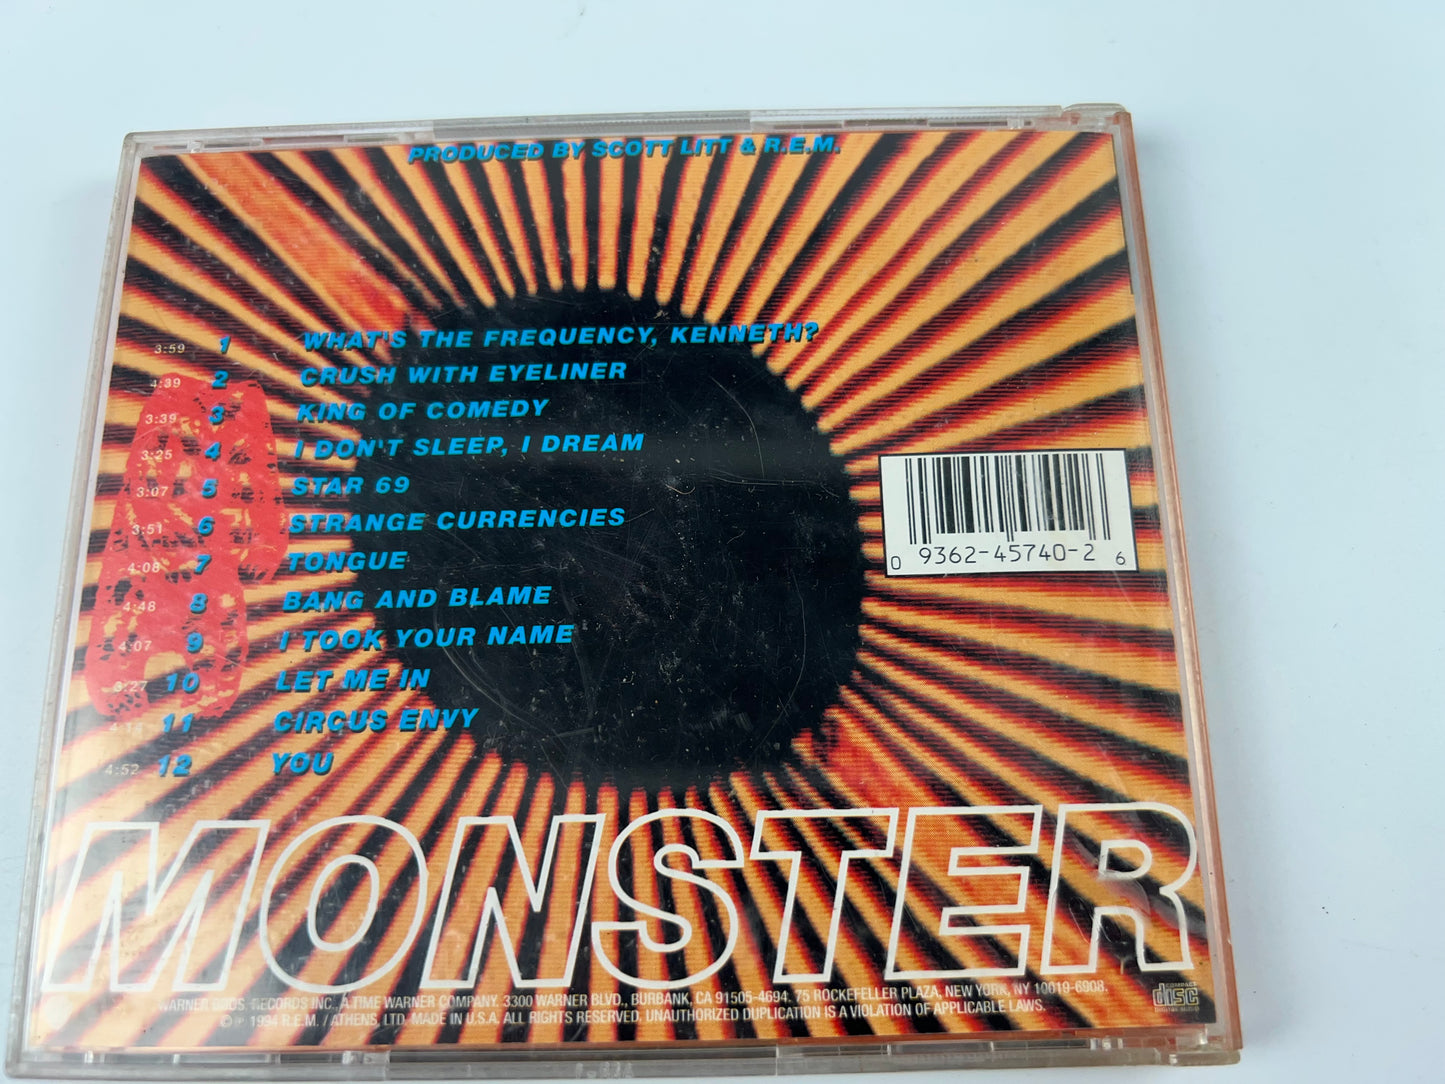 R.E.M. - Monster - CD - 1994 - Warner Bros Records - REM